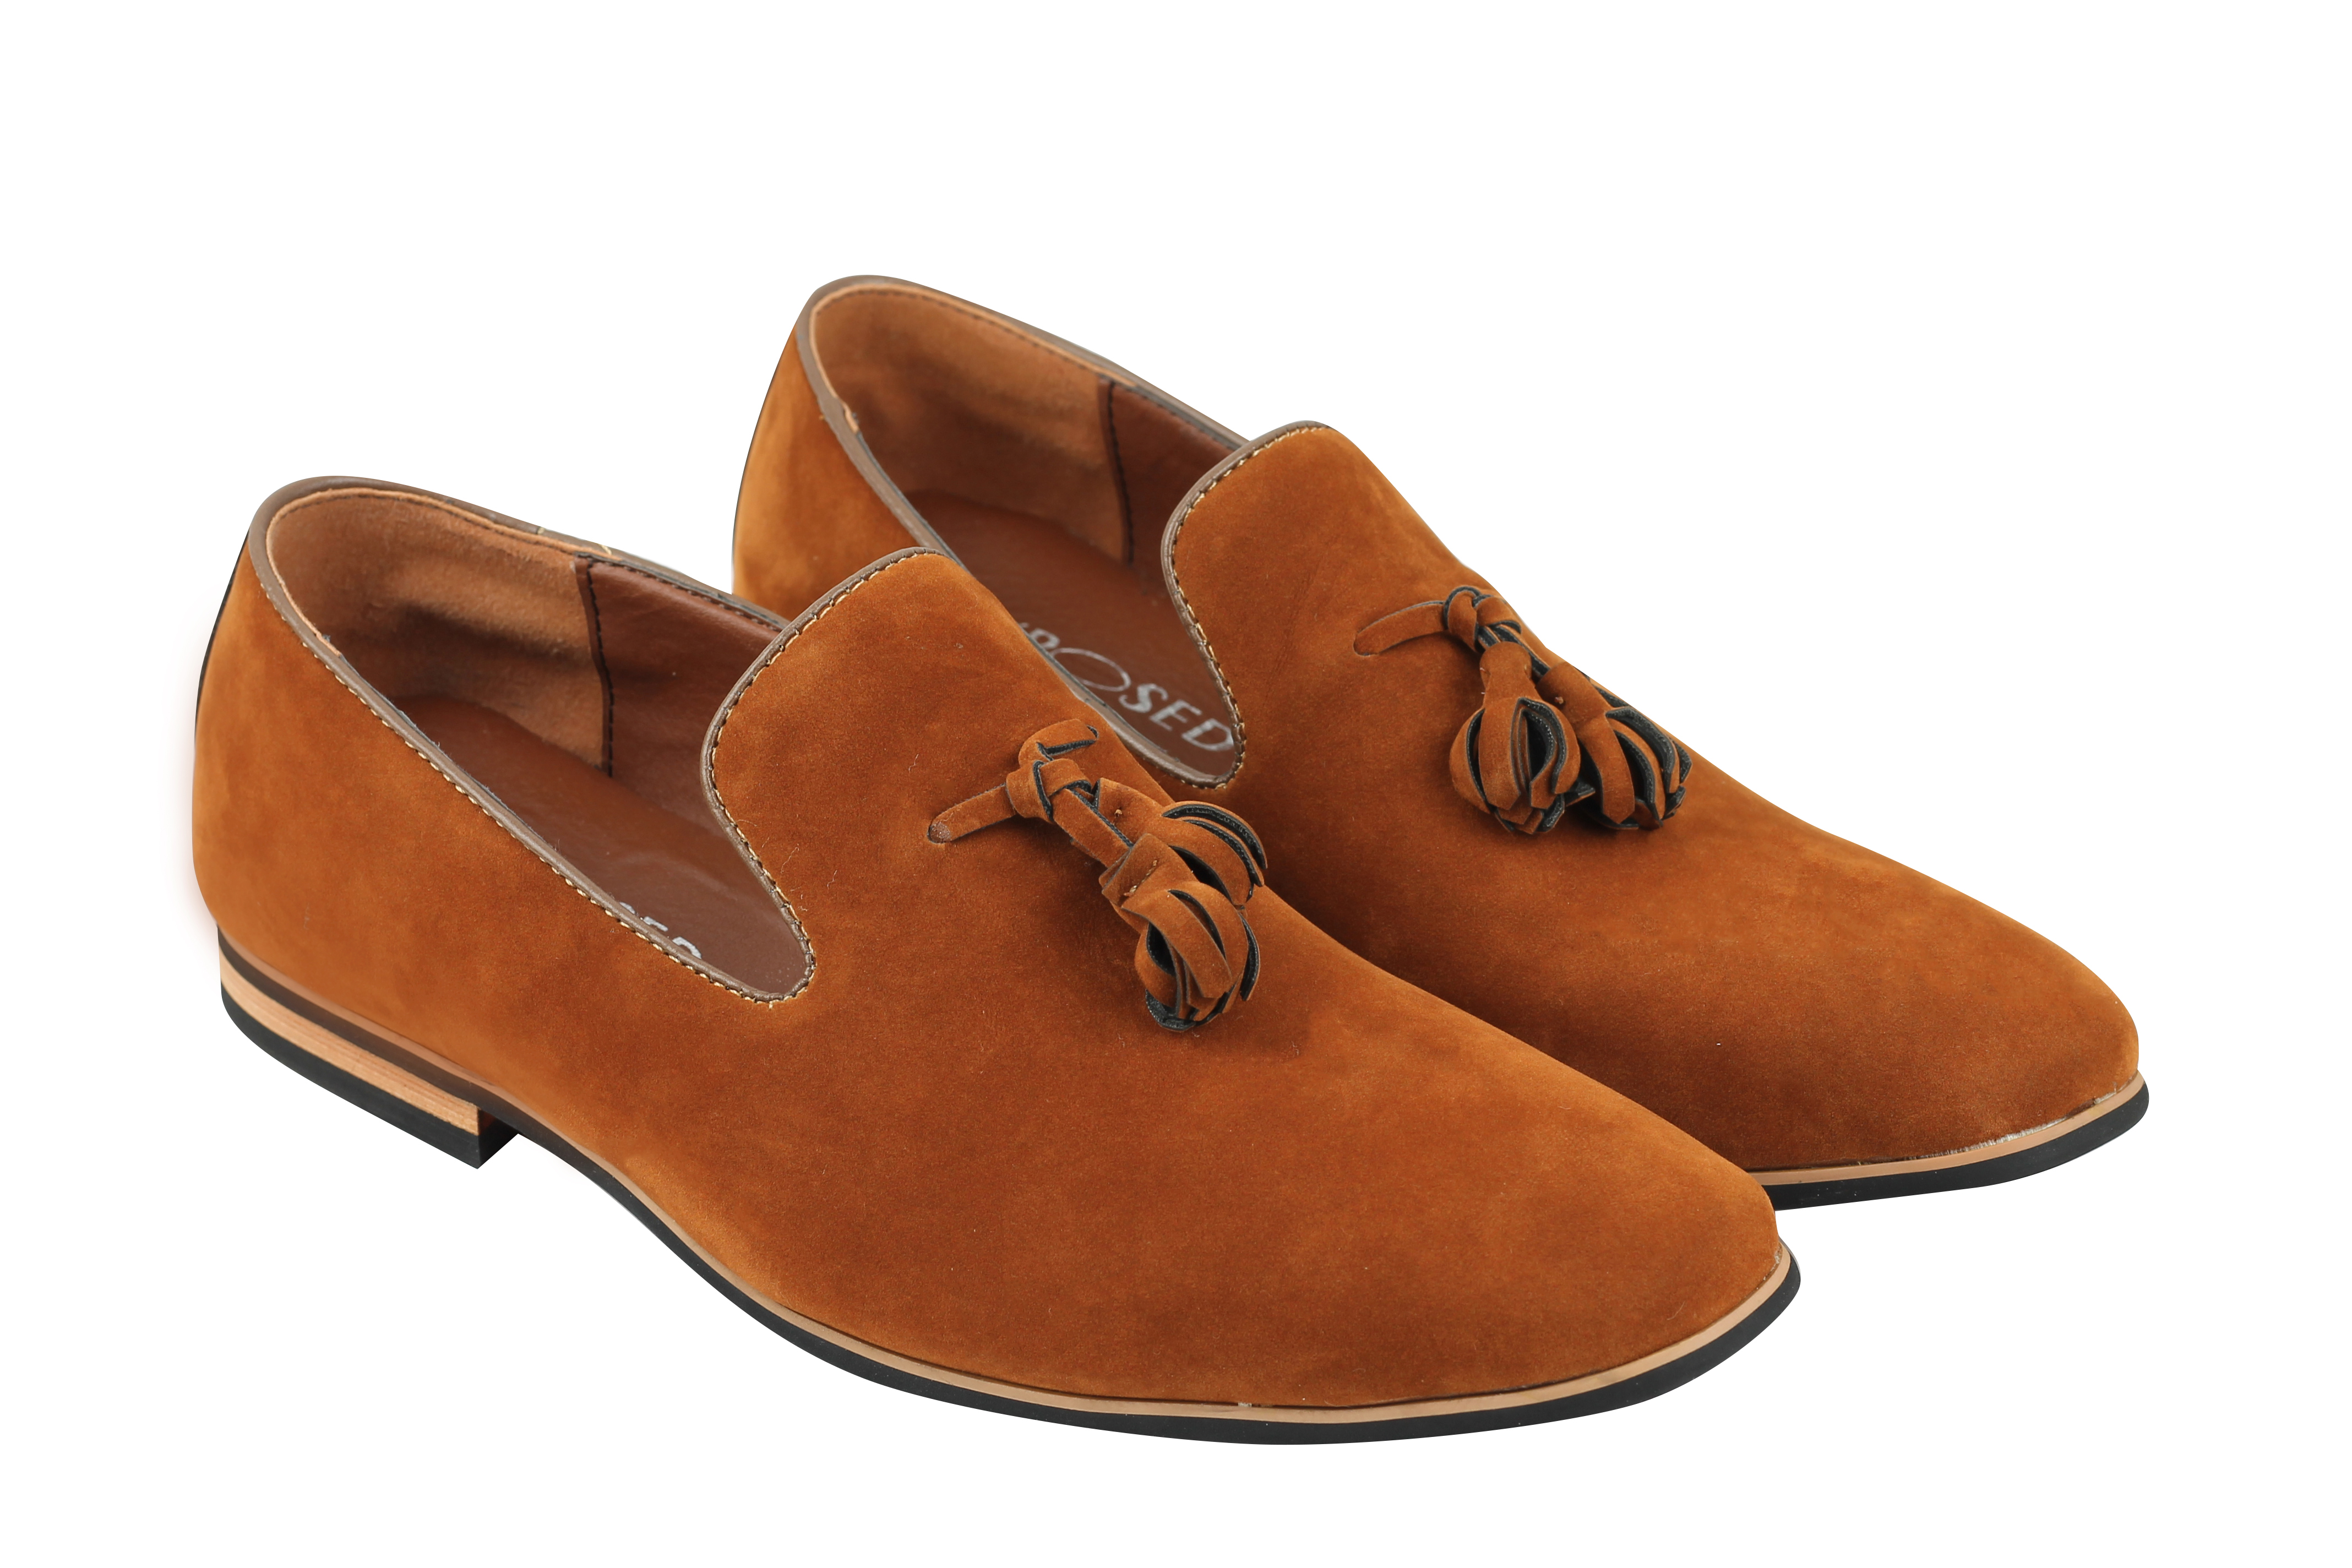 Mens Leather Lined Slip On Suede Loafers Driving Shoes Tassel Design UK Siz 6-11